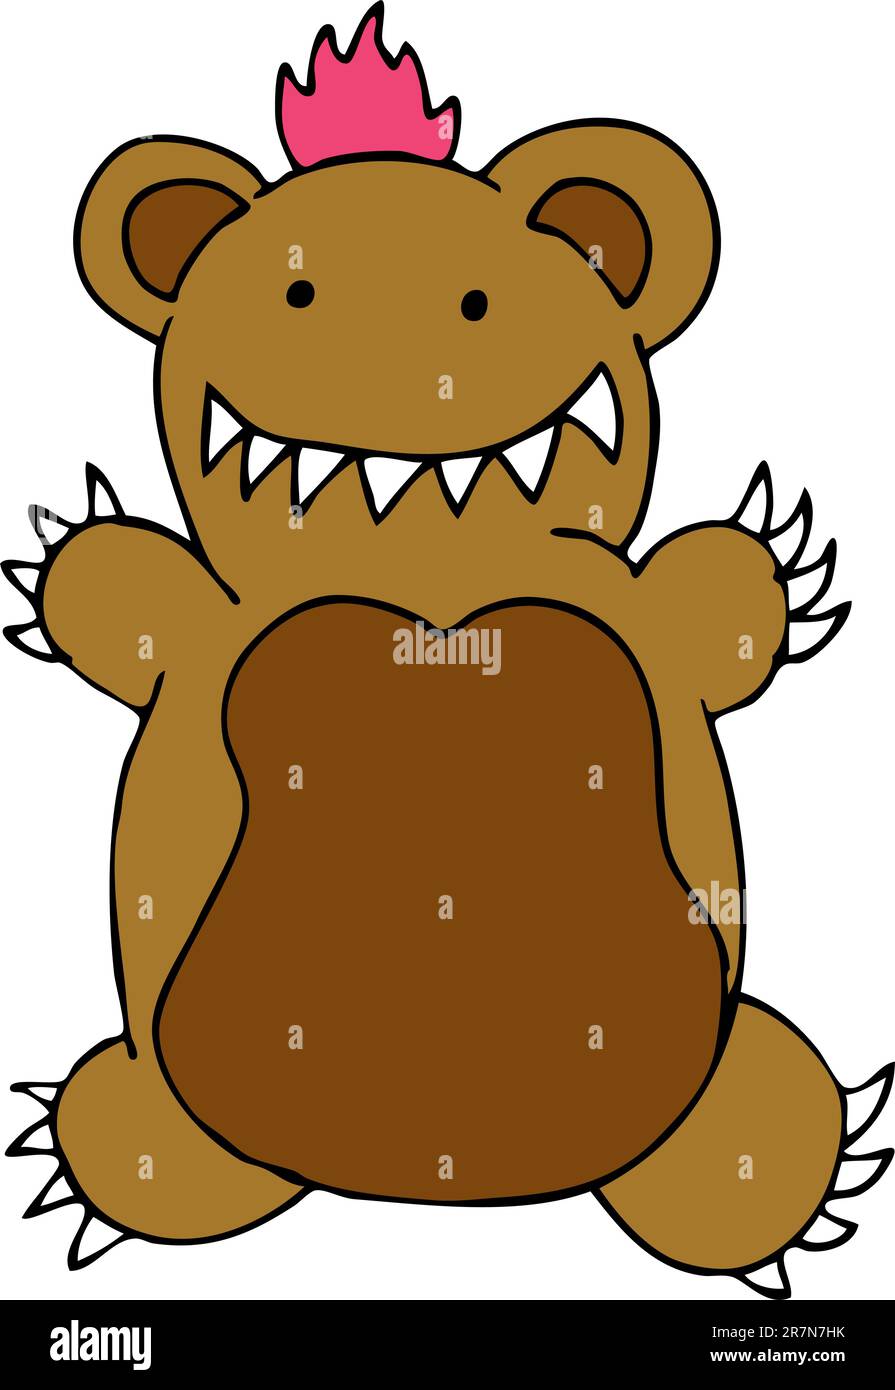 An image of a teddy bear monster. Stock Vector